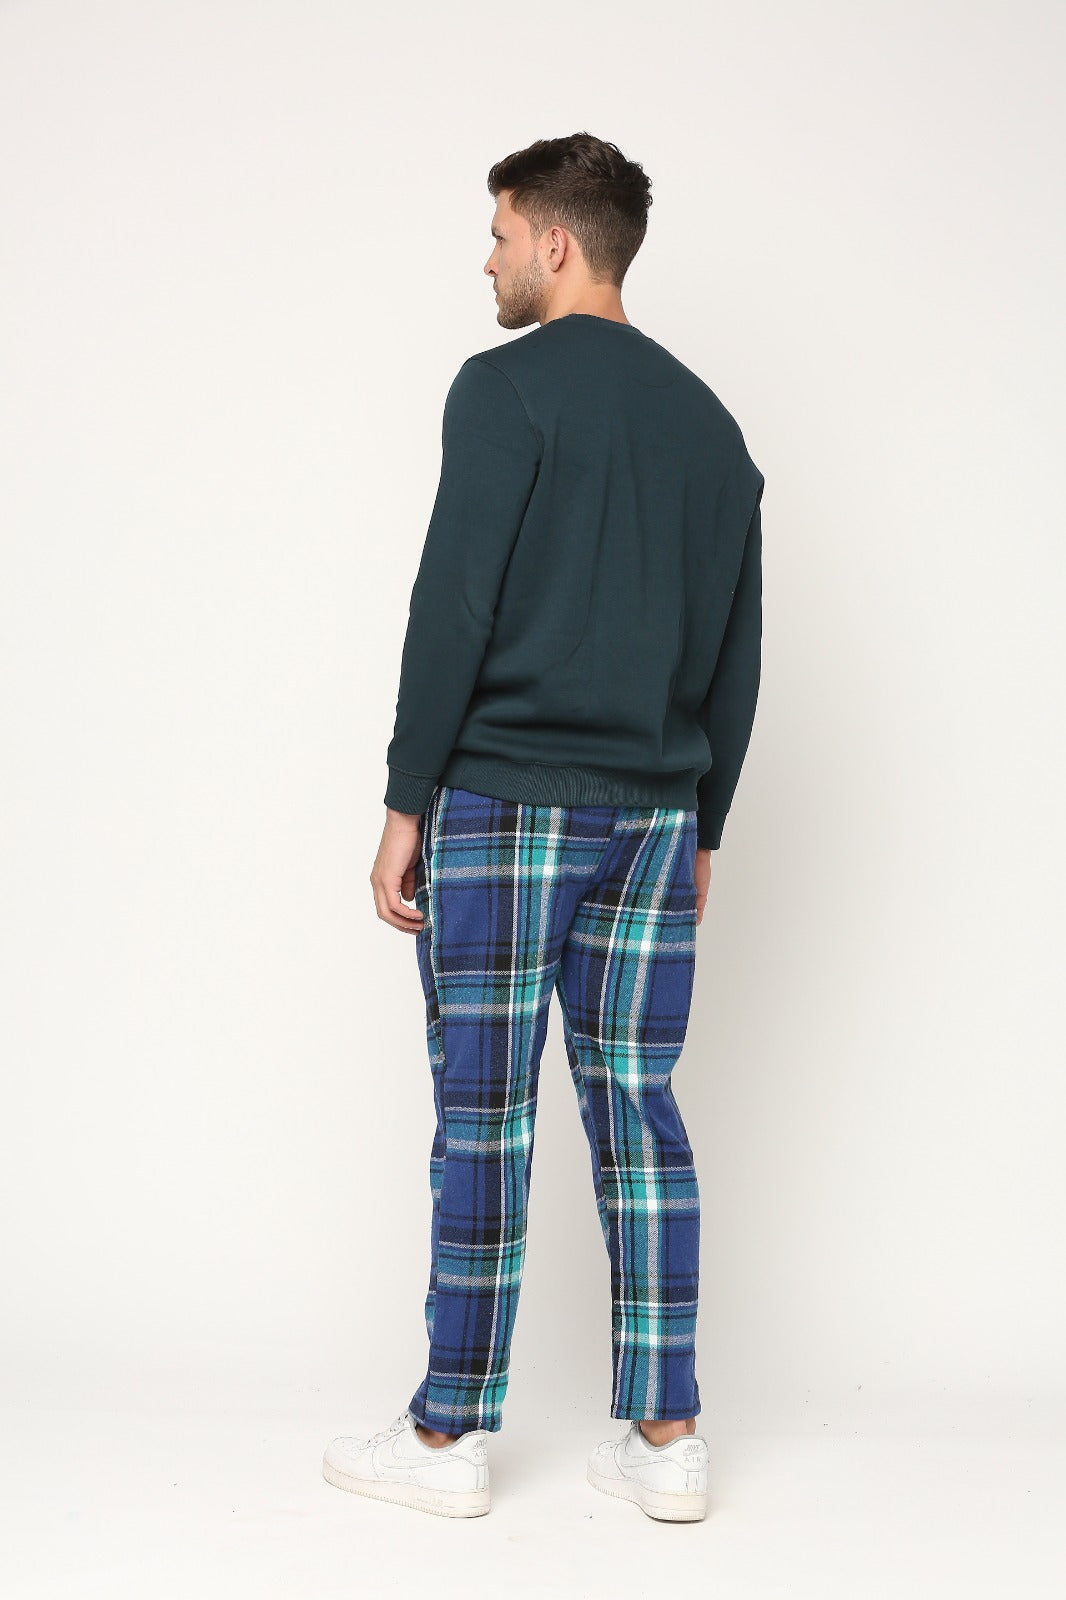 Hemsters Blue & Green Checks Lounge Pants For Mens